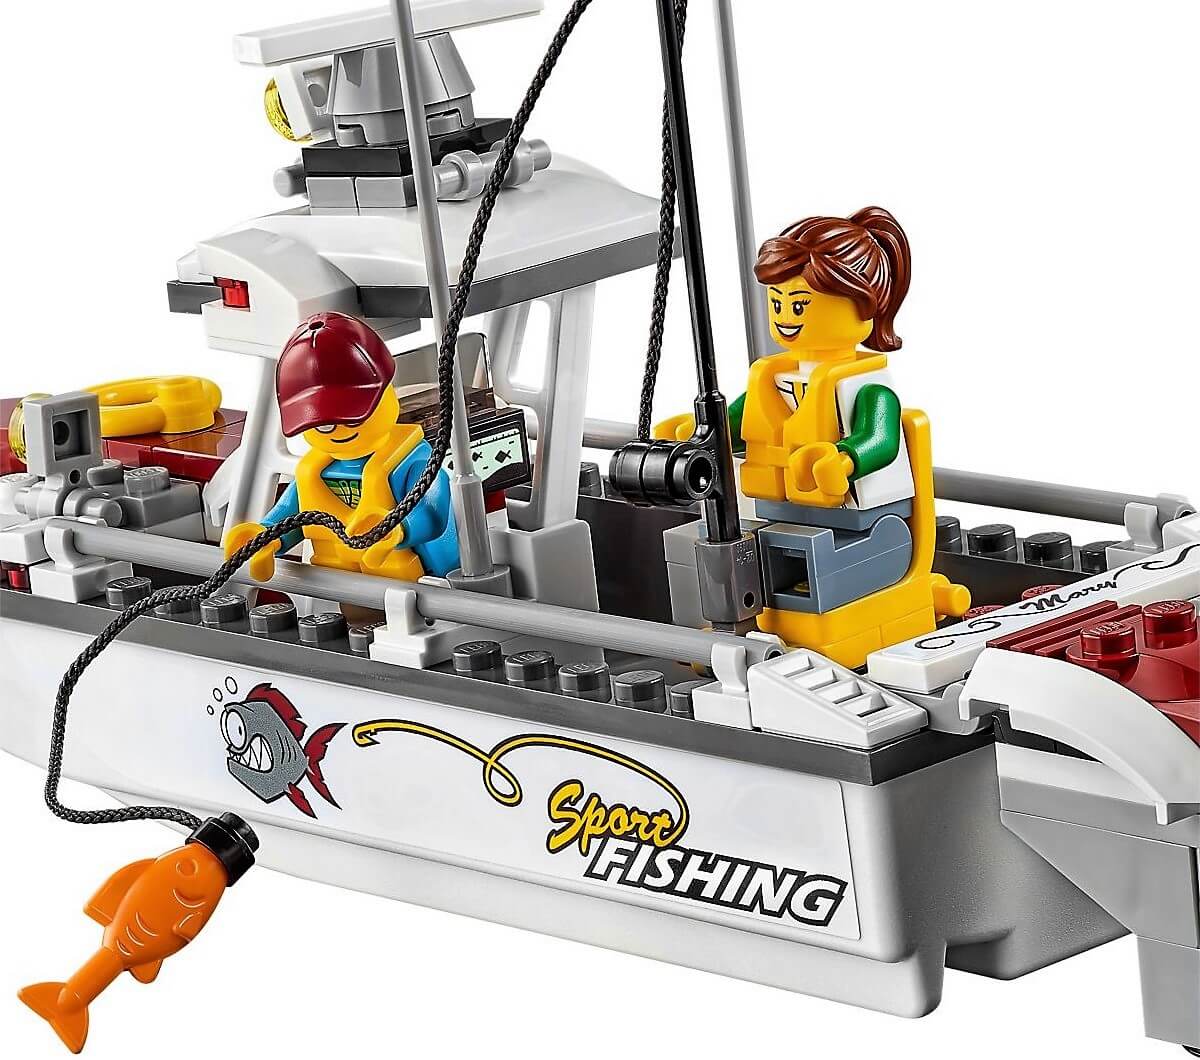 Barco de pesca ( Lego 60147 ) imagen d